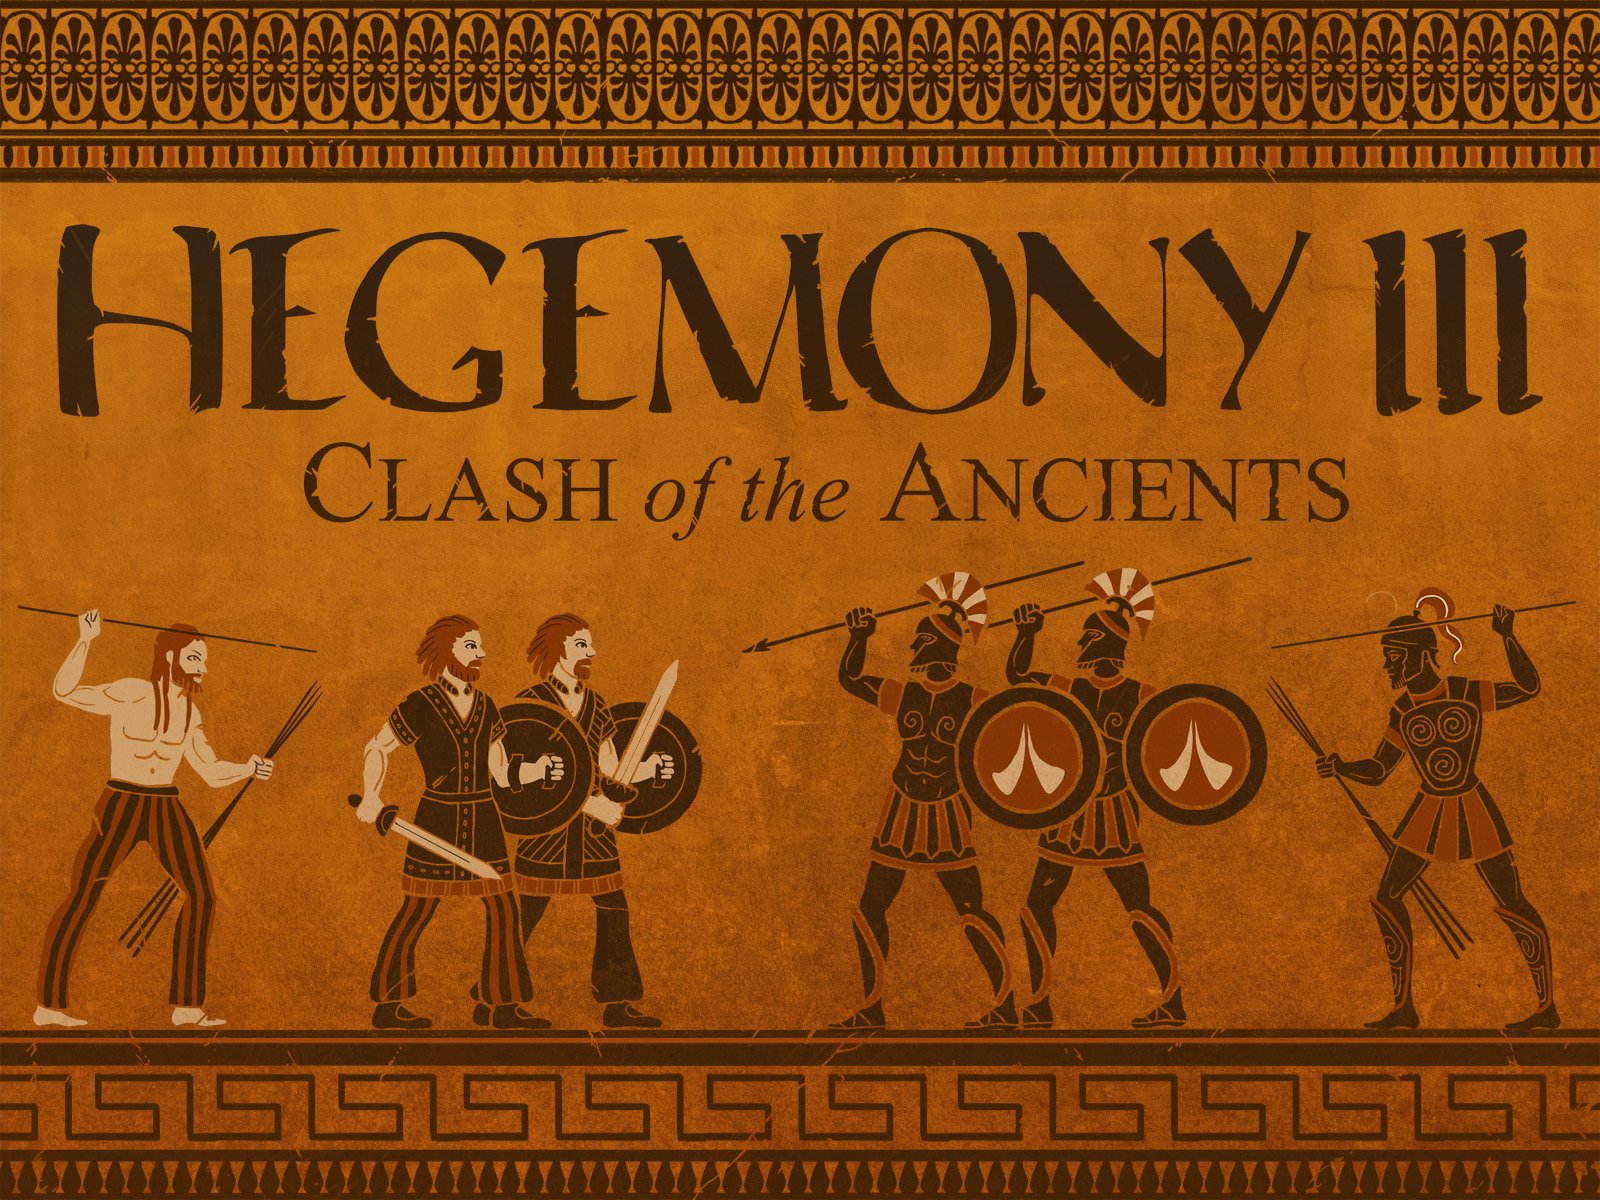 Image of Hegemony III: Clash of the Ancients